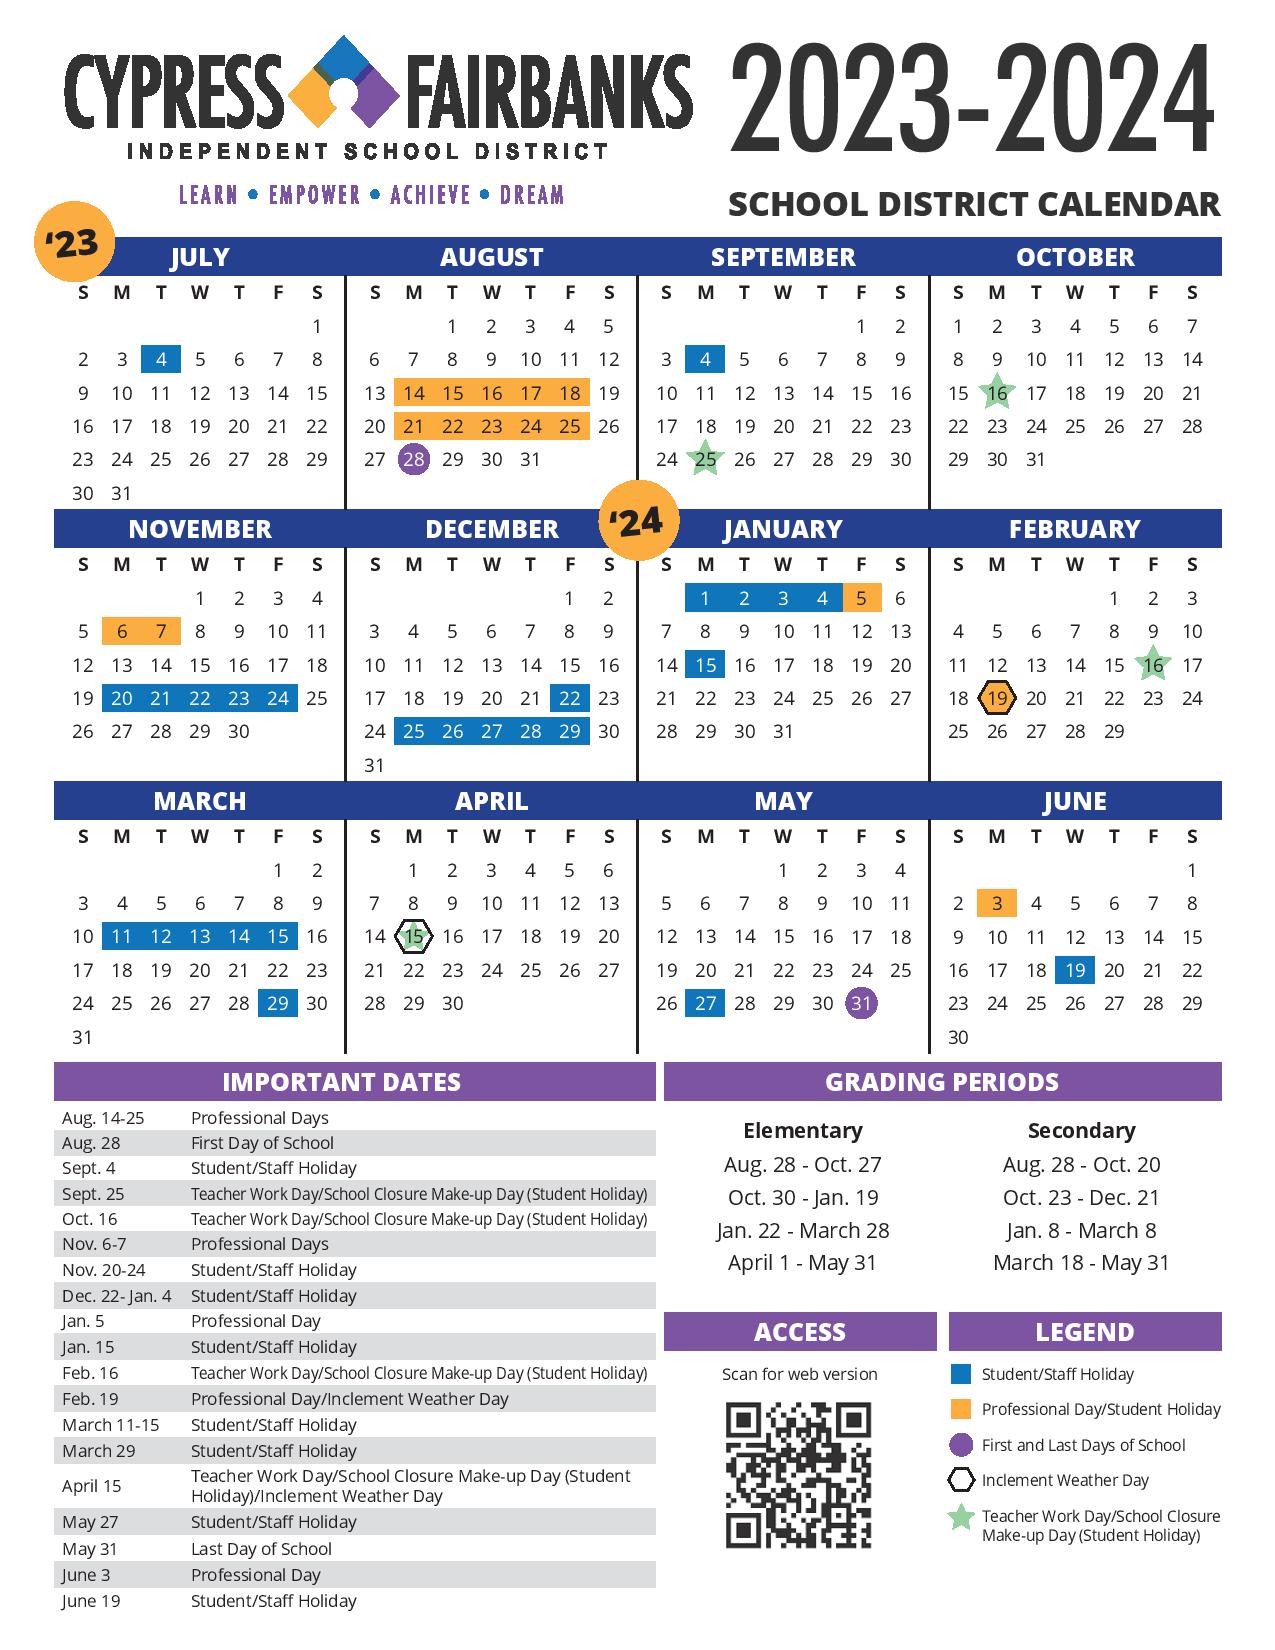 cypress-fairbanks-independent-school-district-calendar-2023-2024